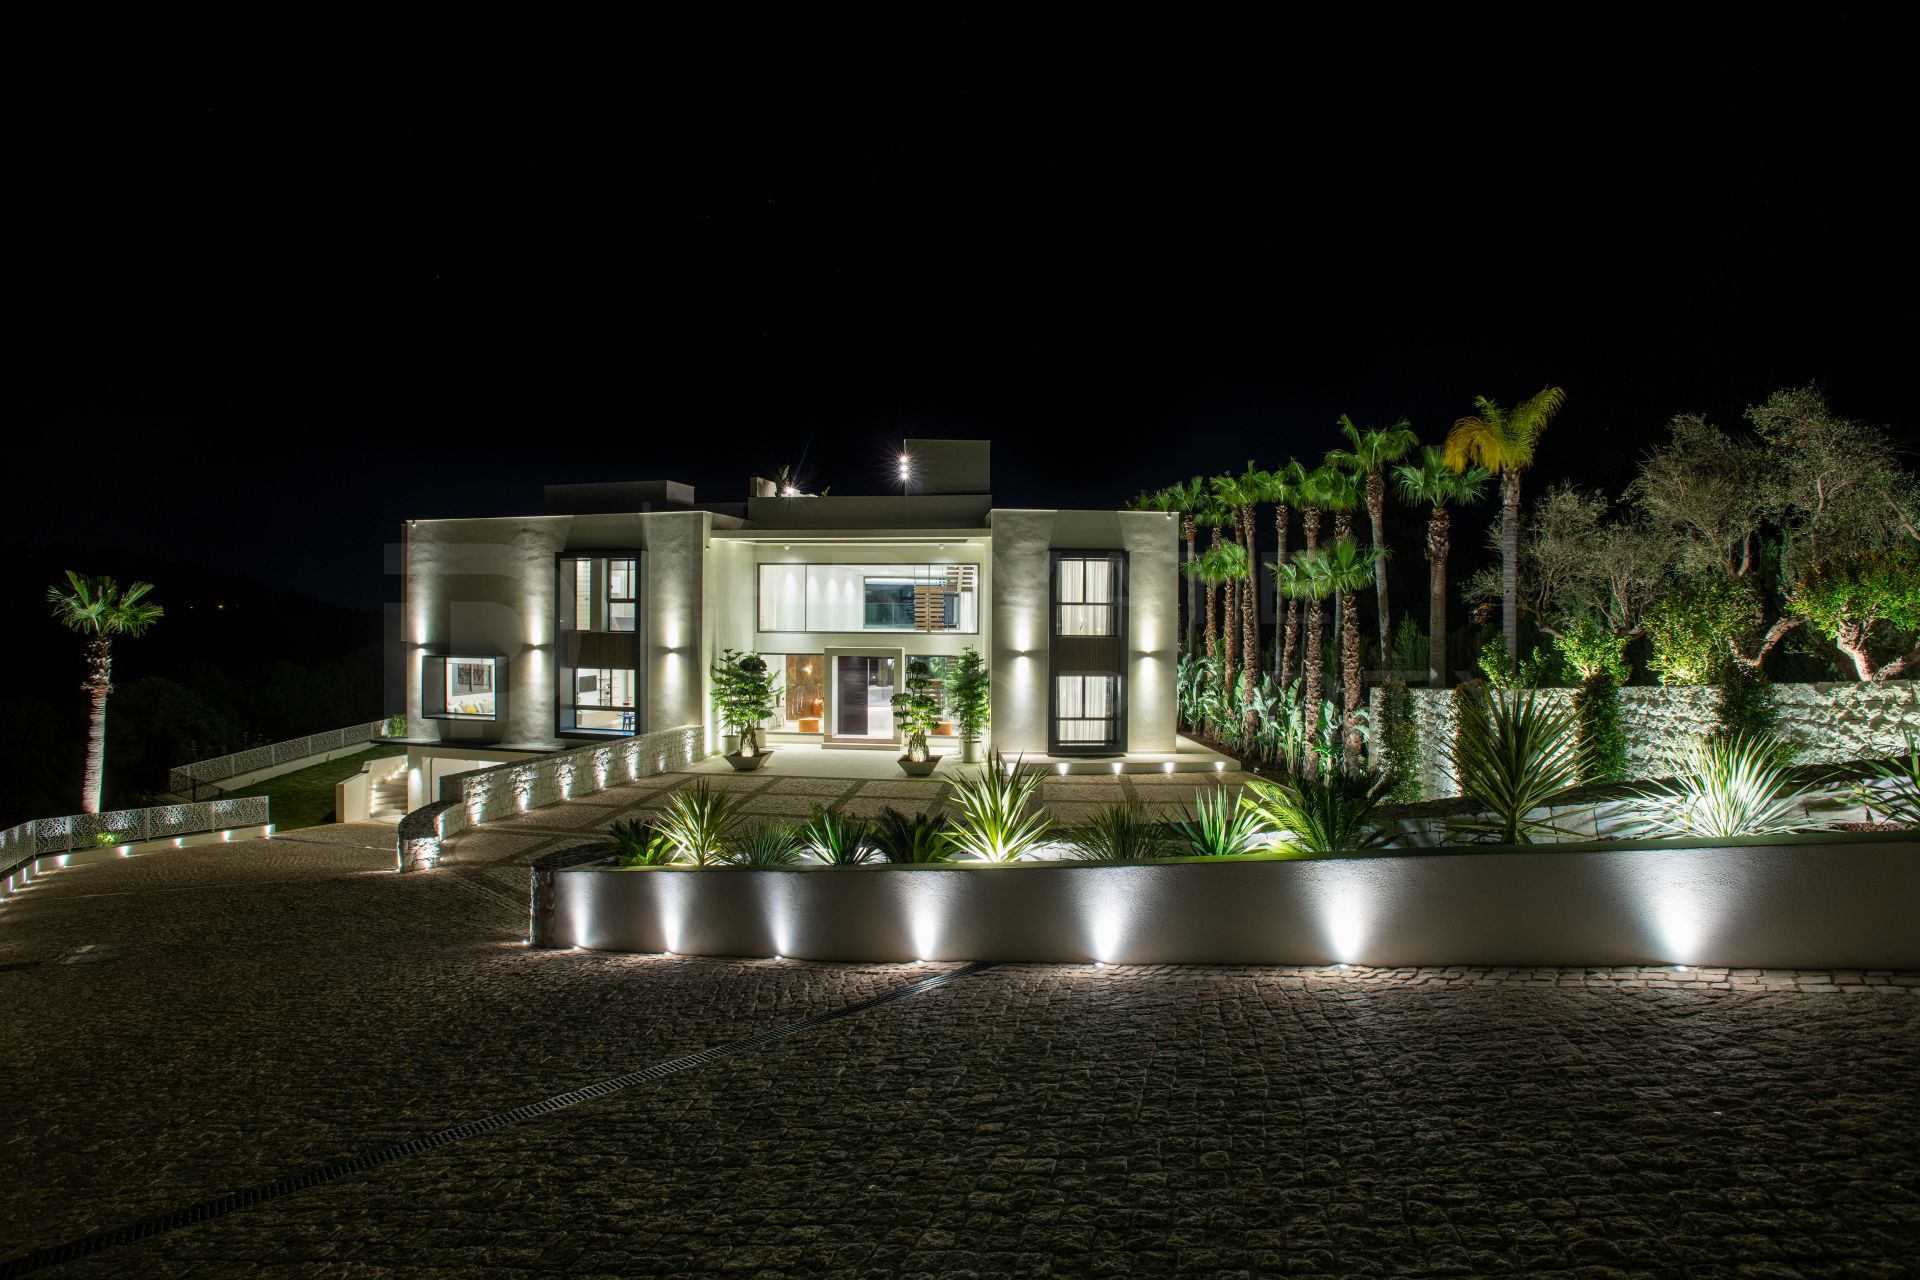 Outstanding new villa in La Zagaleta